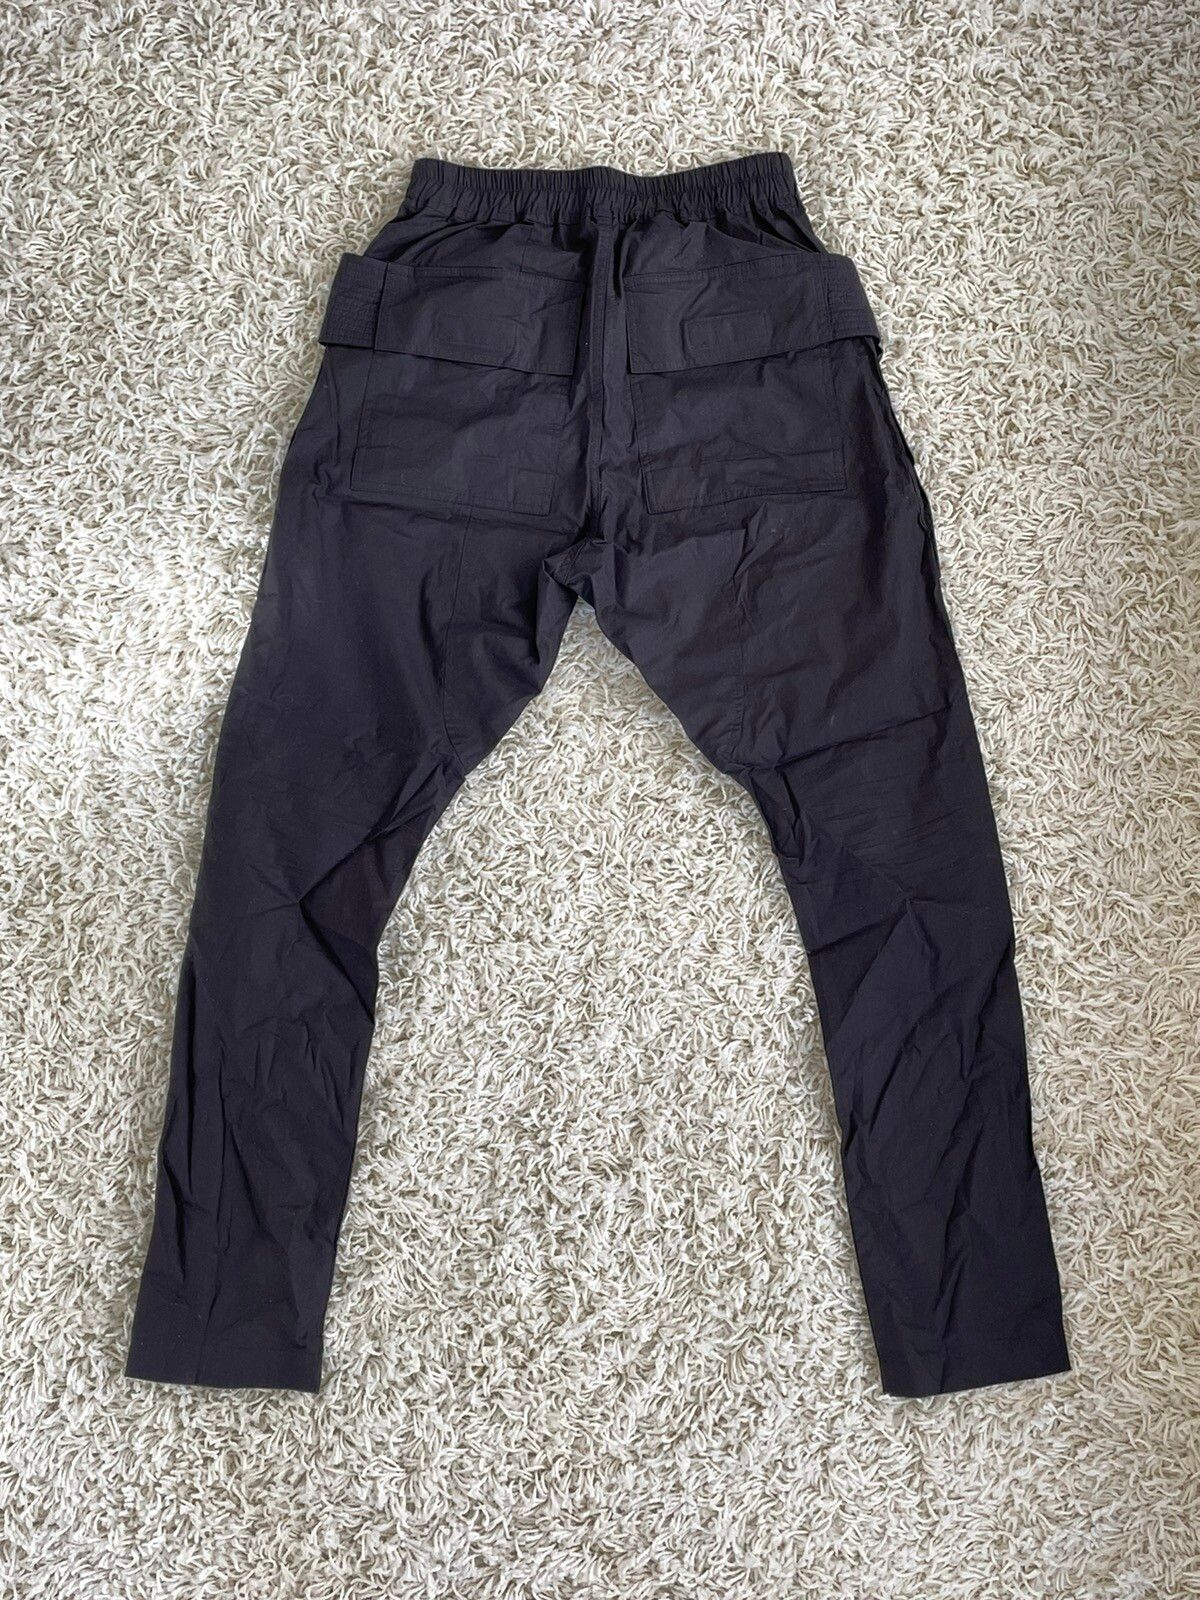 Rick Owens Drkshdw rick owens drkshdw creatch cargo pants black sz xs (28-31)  | Grailed